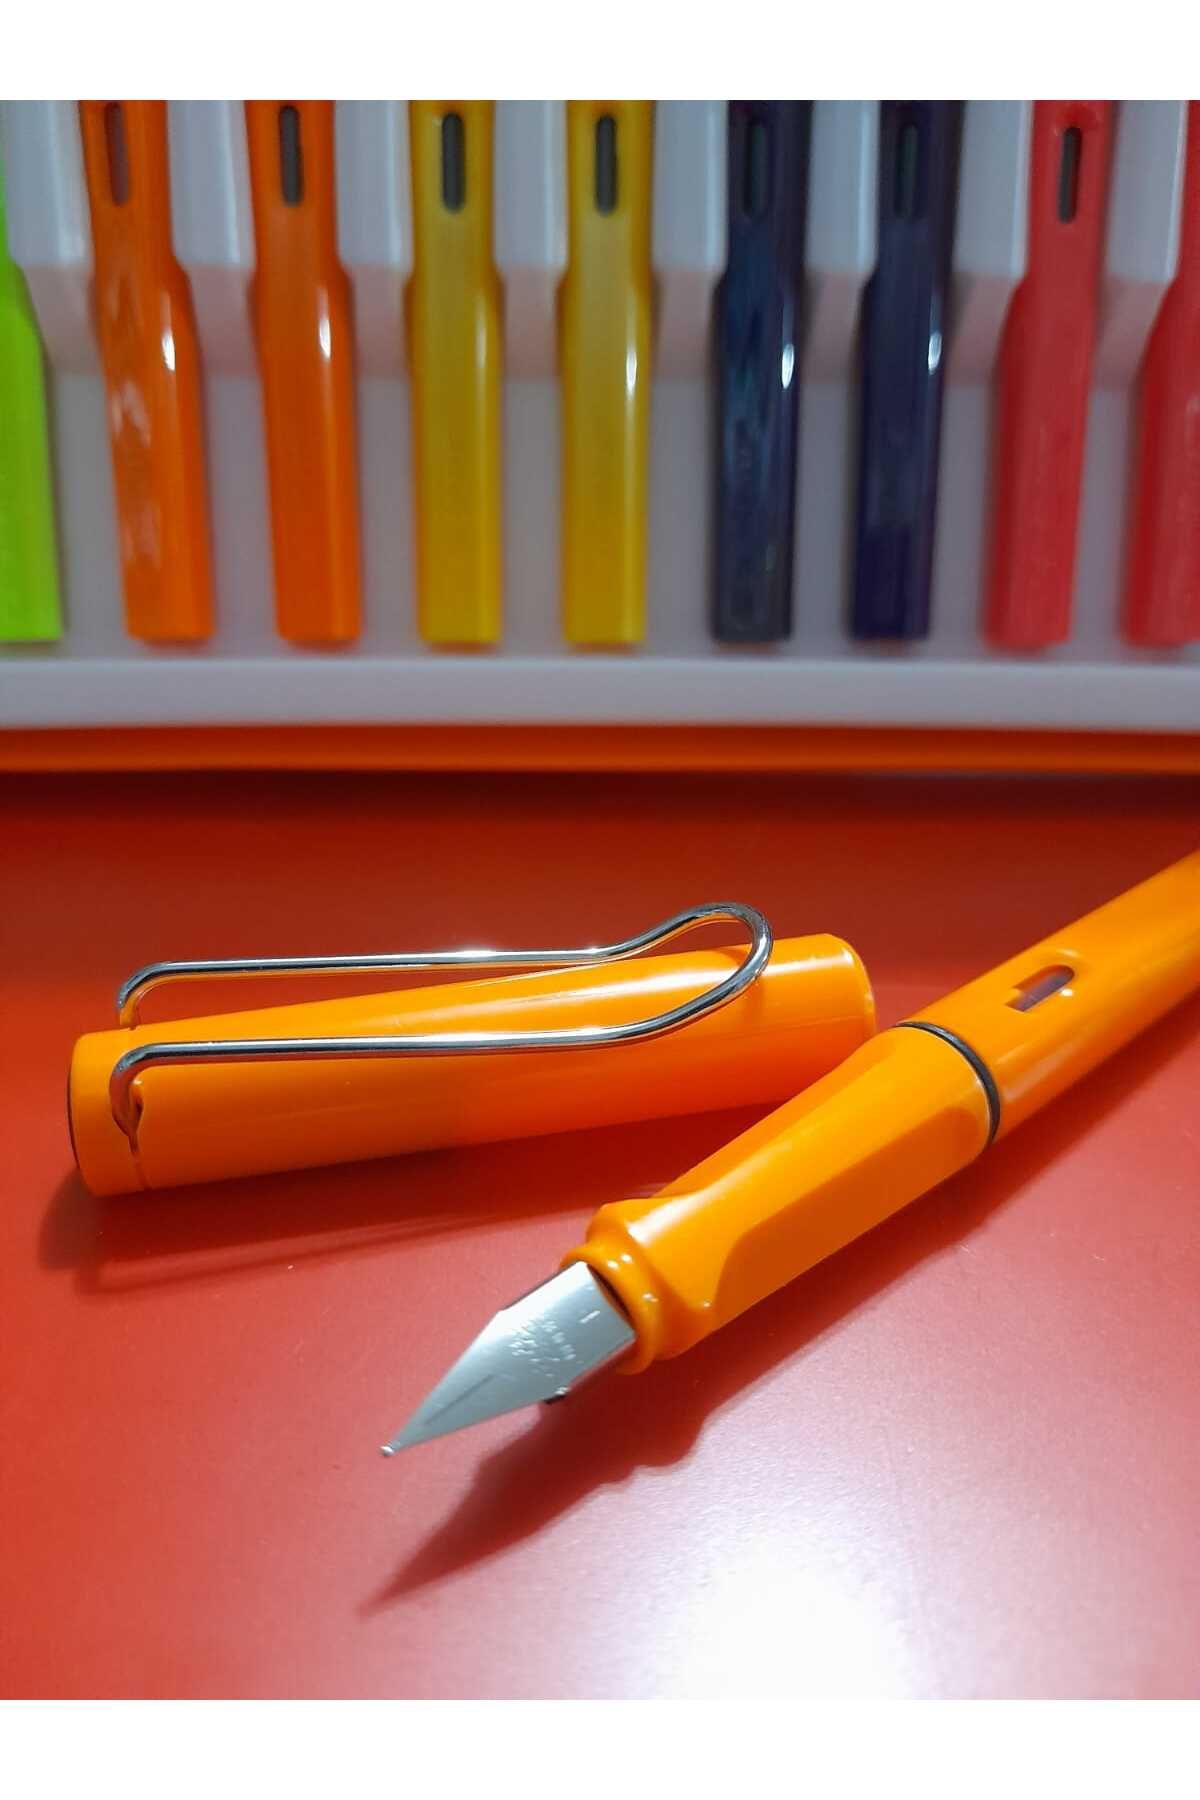 jinhao dolma kalem OPAK GÖVDE TURUNCU renk (F) 0,60mm uç sert plastik gövde